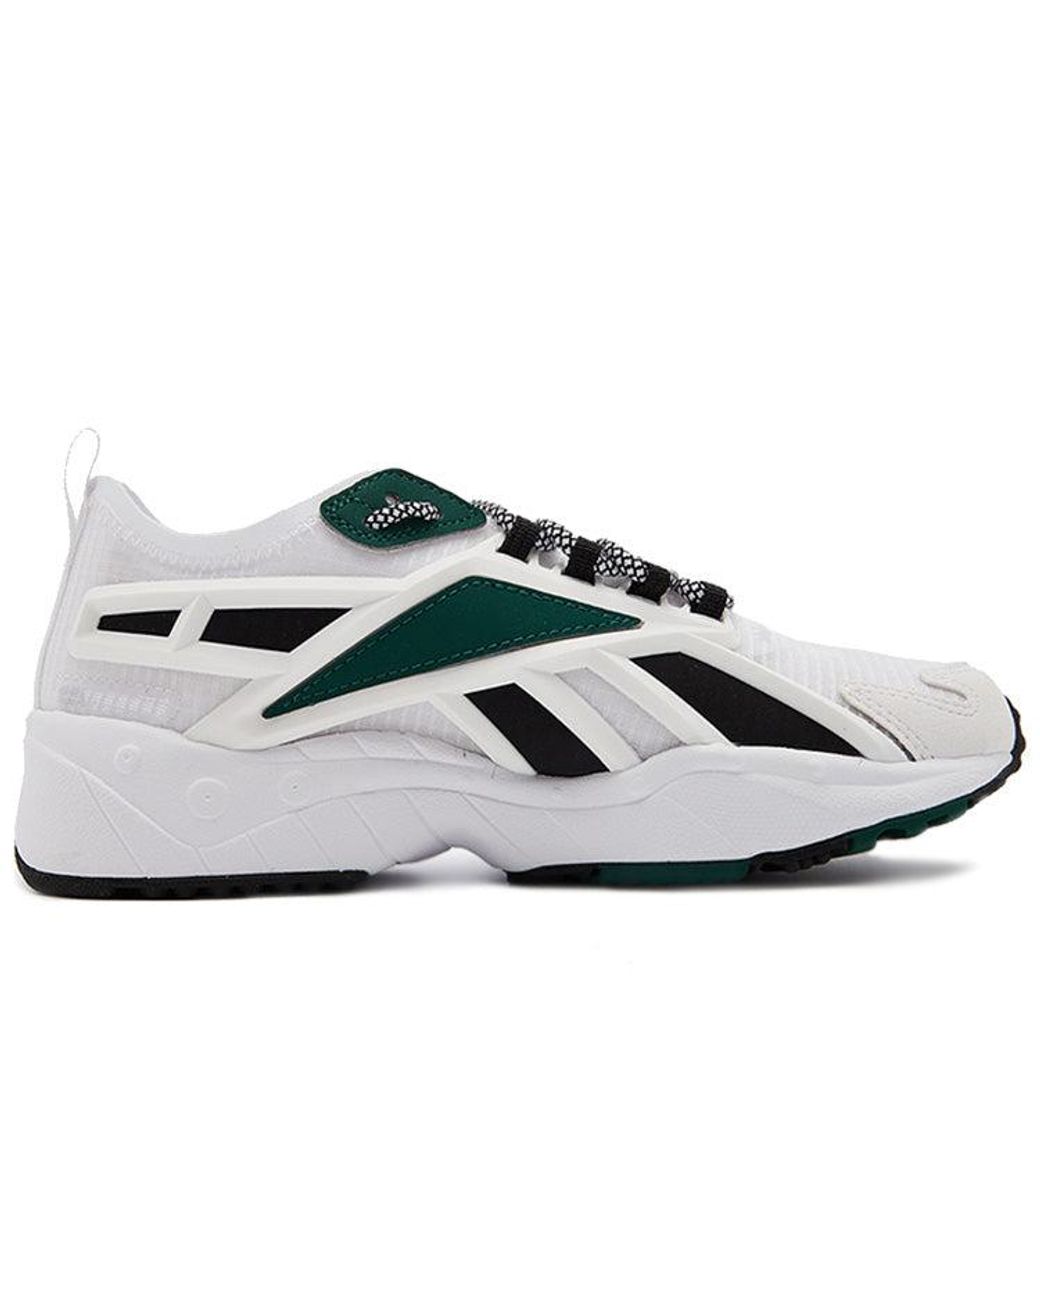 Reebok Intv 20 Sports Shoes White/green | Lyst